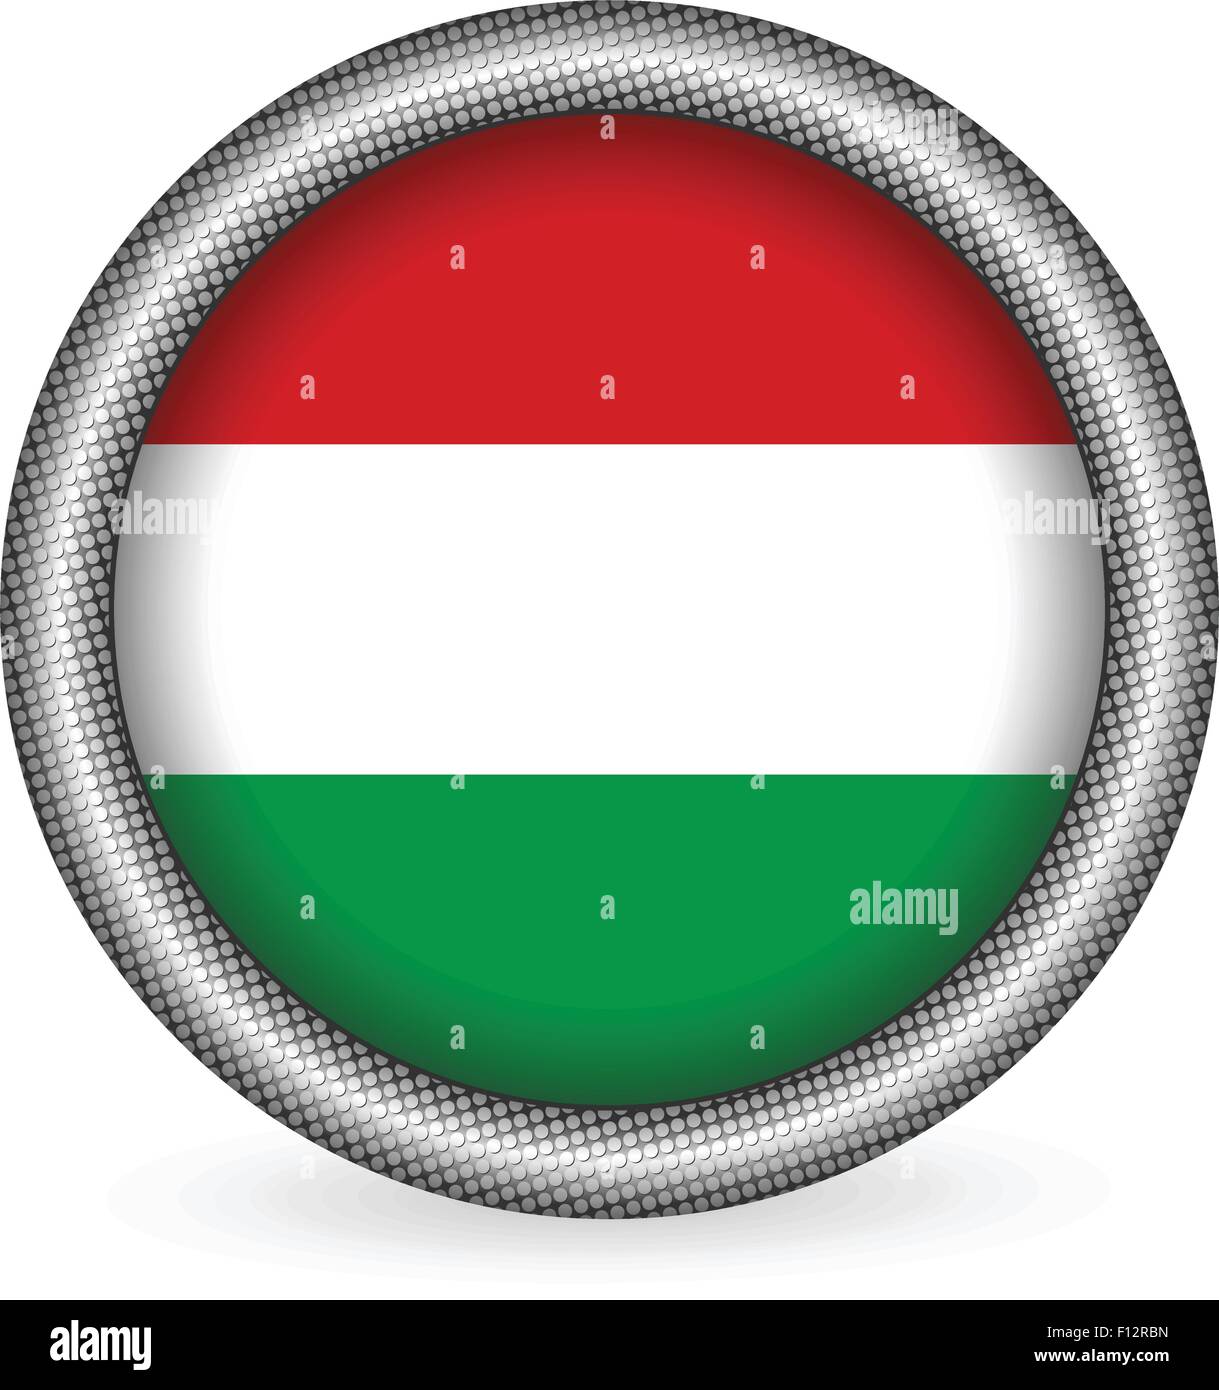 Ungheria bandiera pulsante su uno sfondo bianco. Illustrazione Vettoriale. Illustrazione Vettoriale